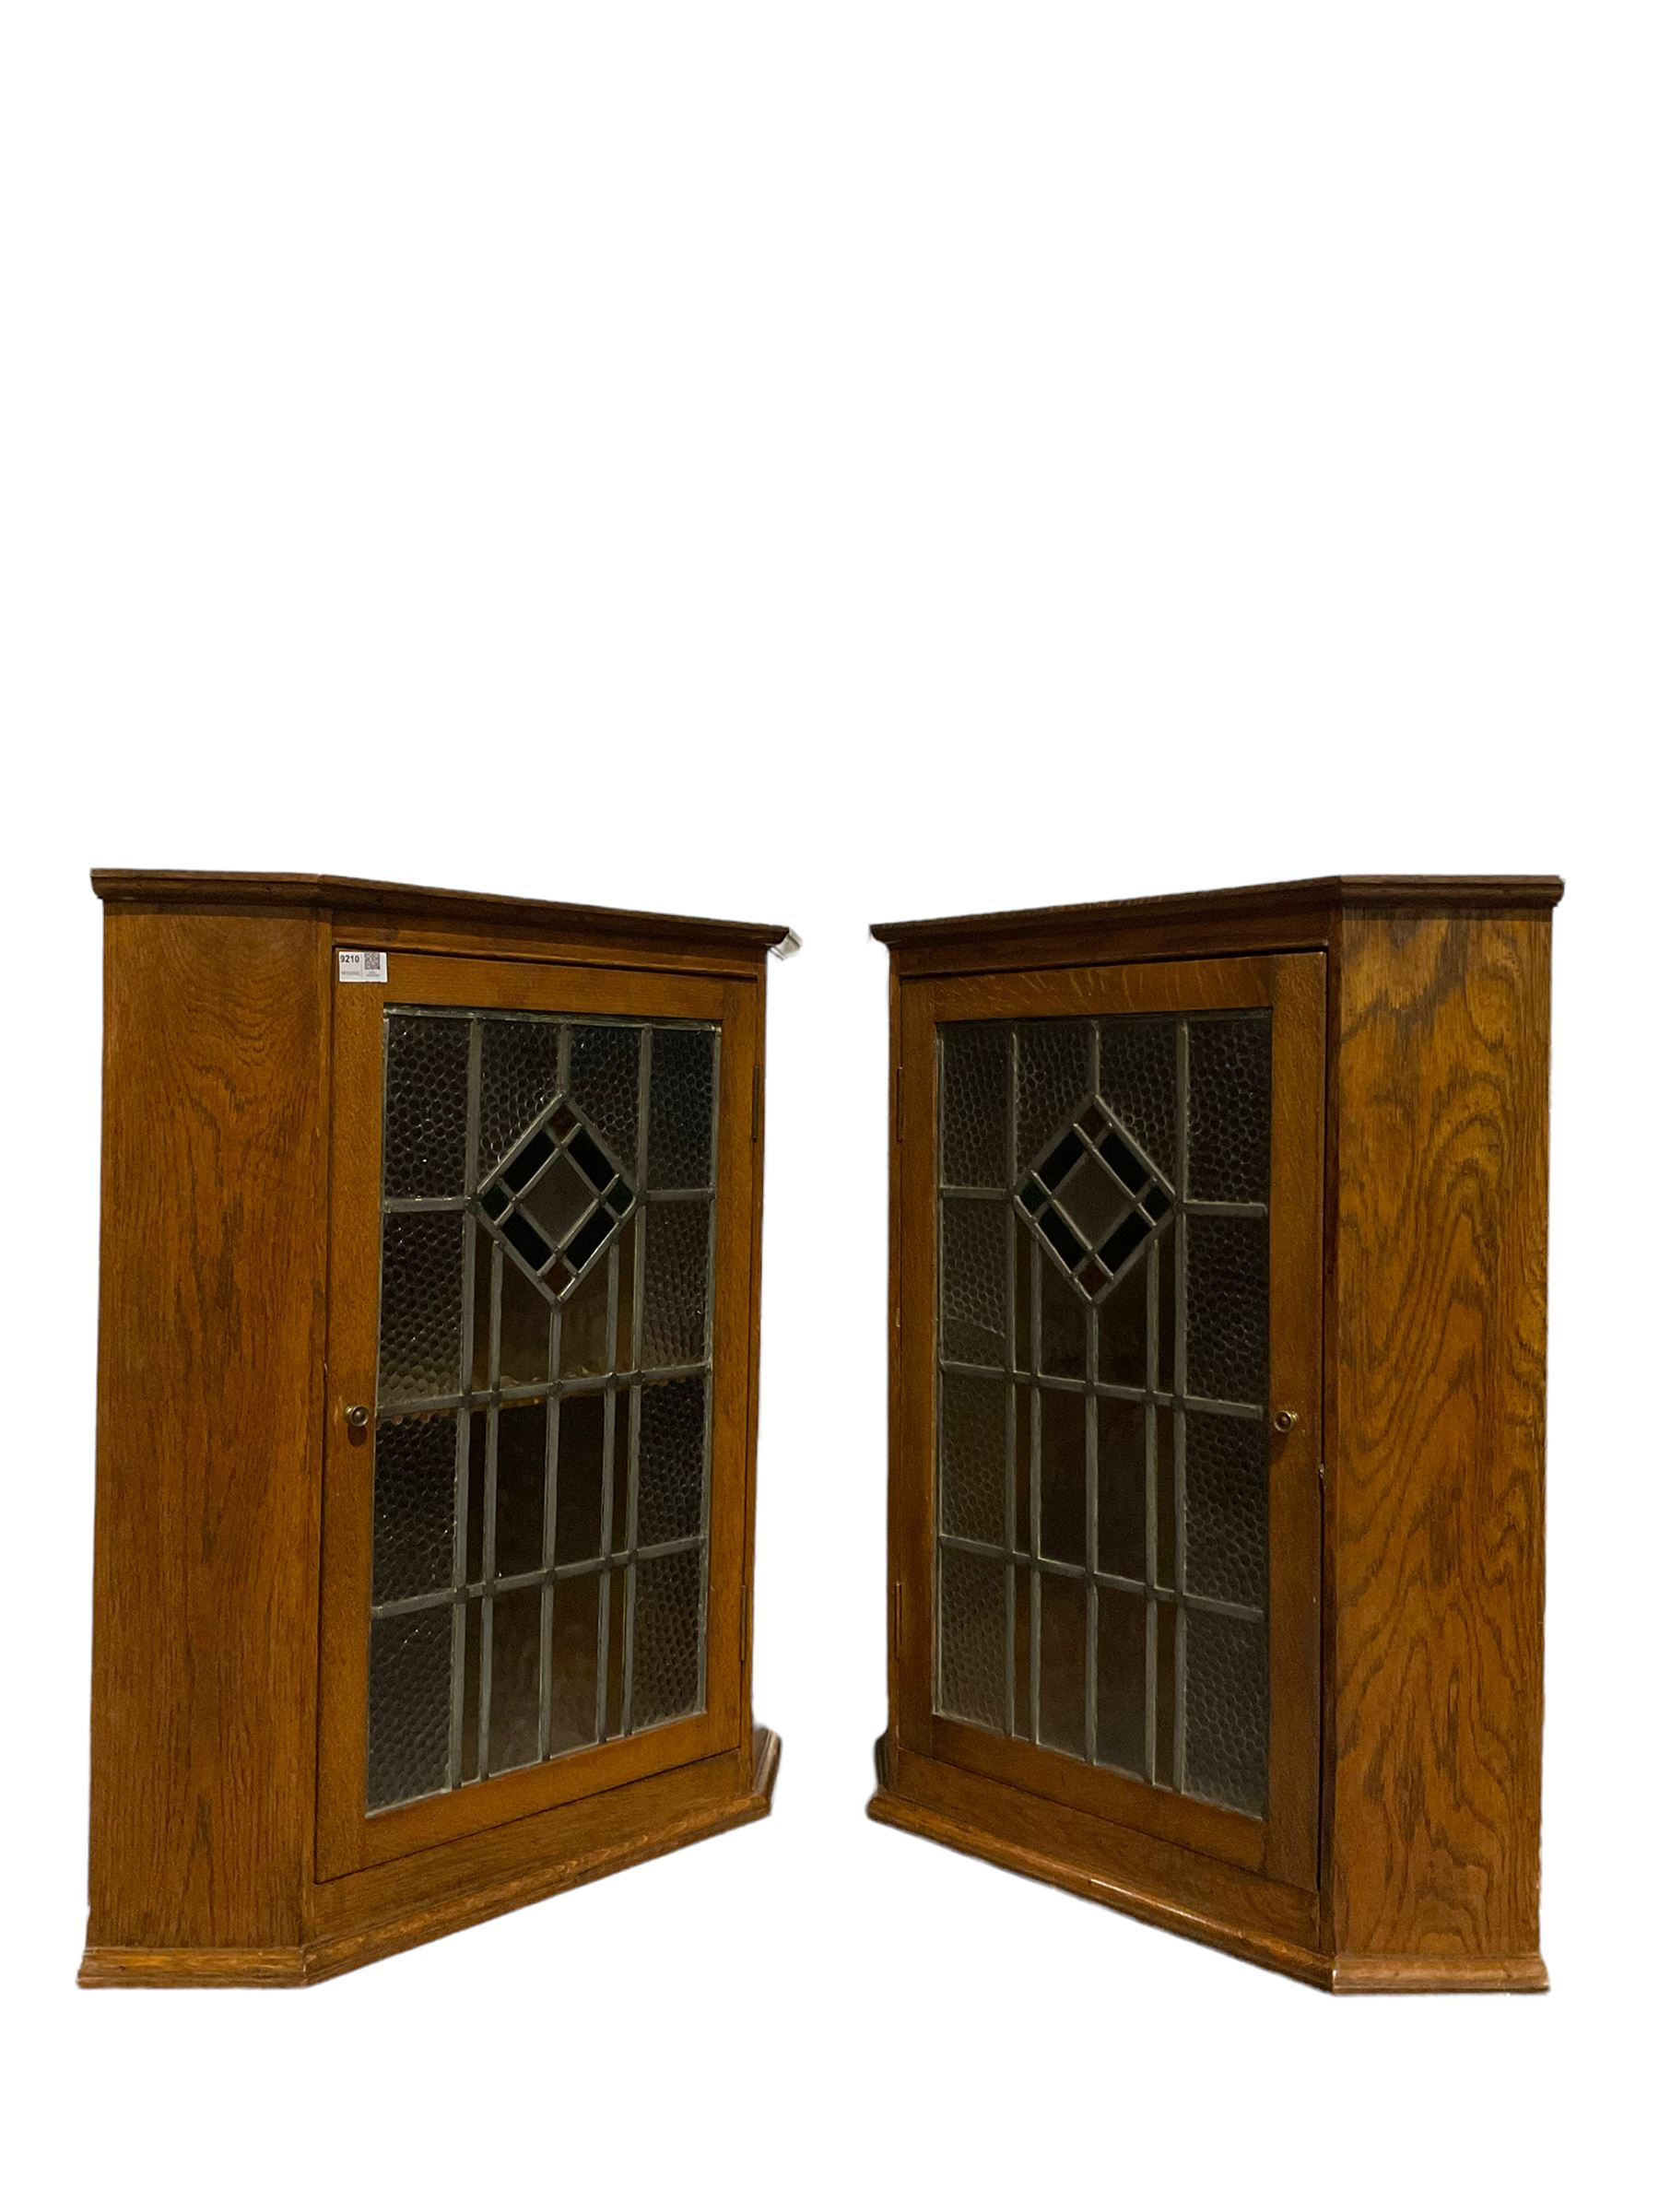 Pair oak corner cabinets - Image 2 of 2